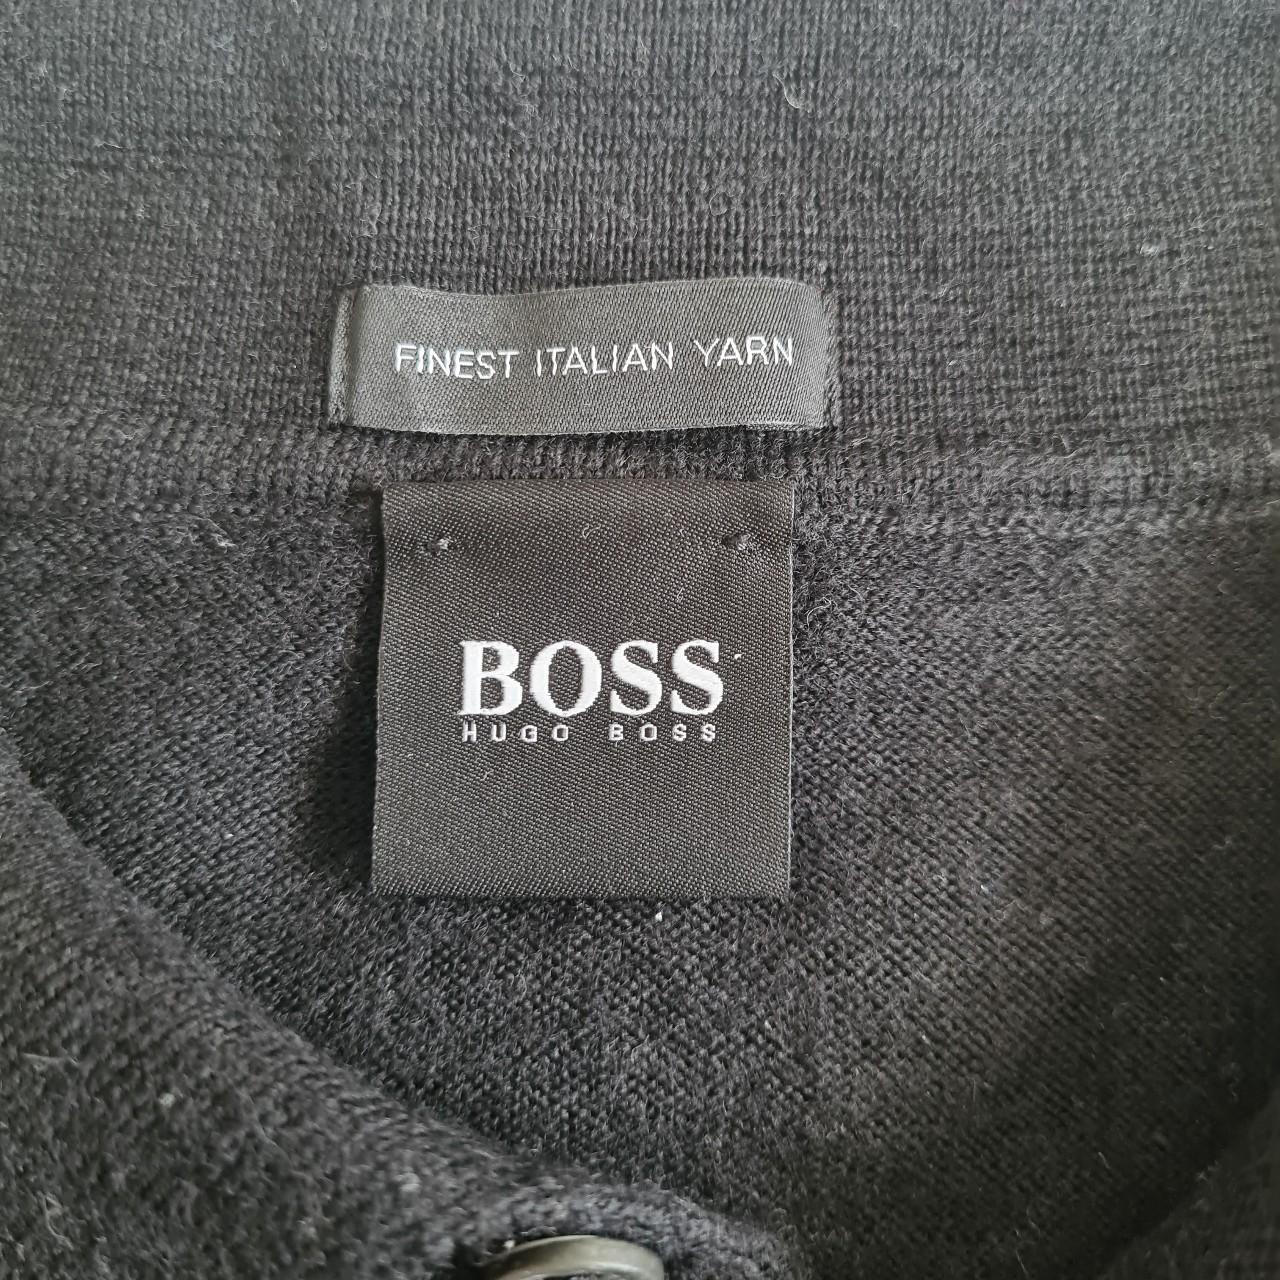 Hugo Boss Italian yarn long-sleeved polo... - Depop